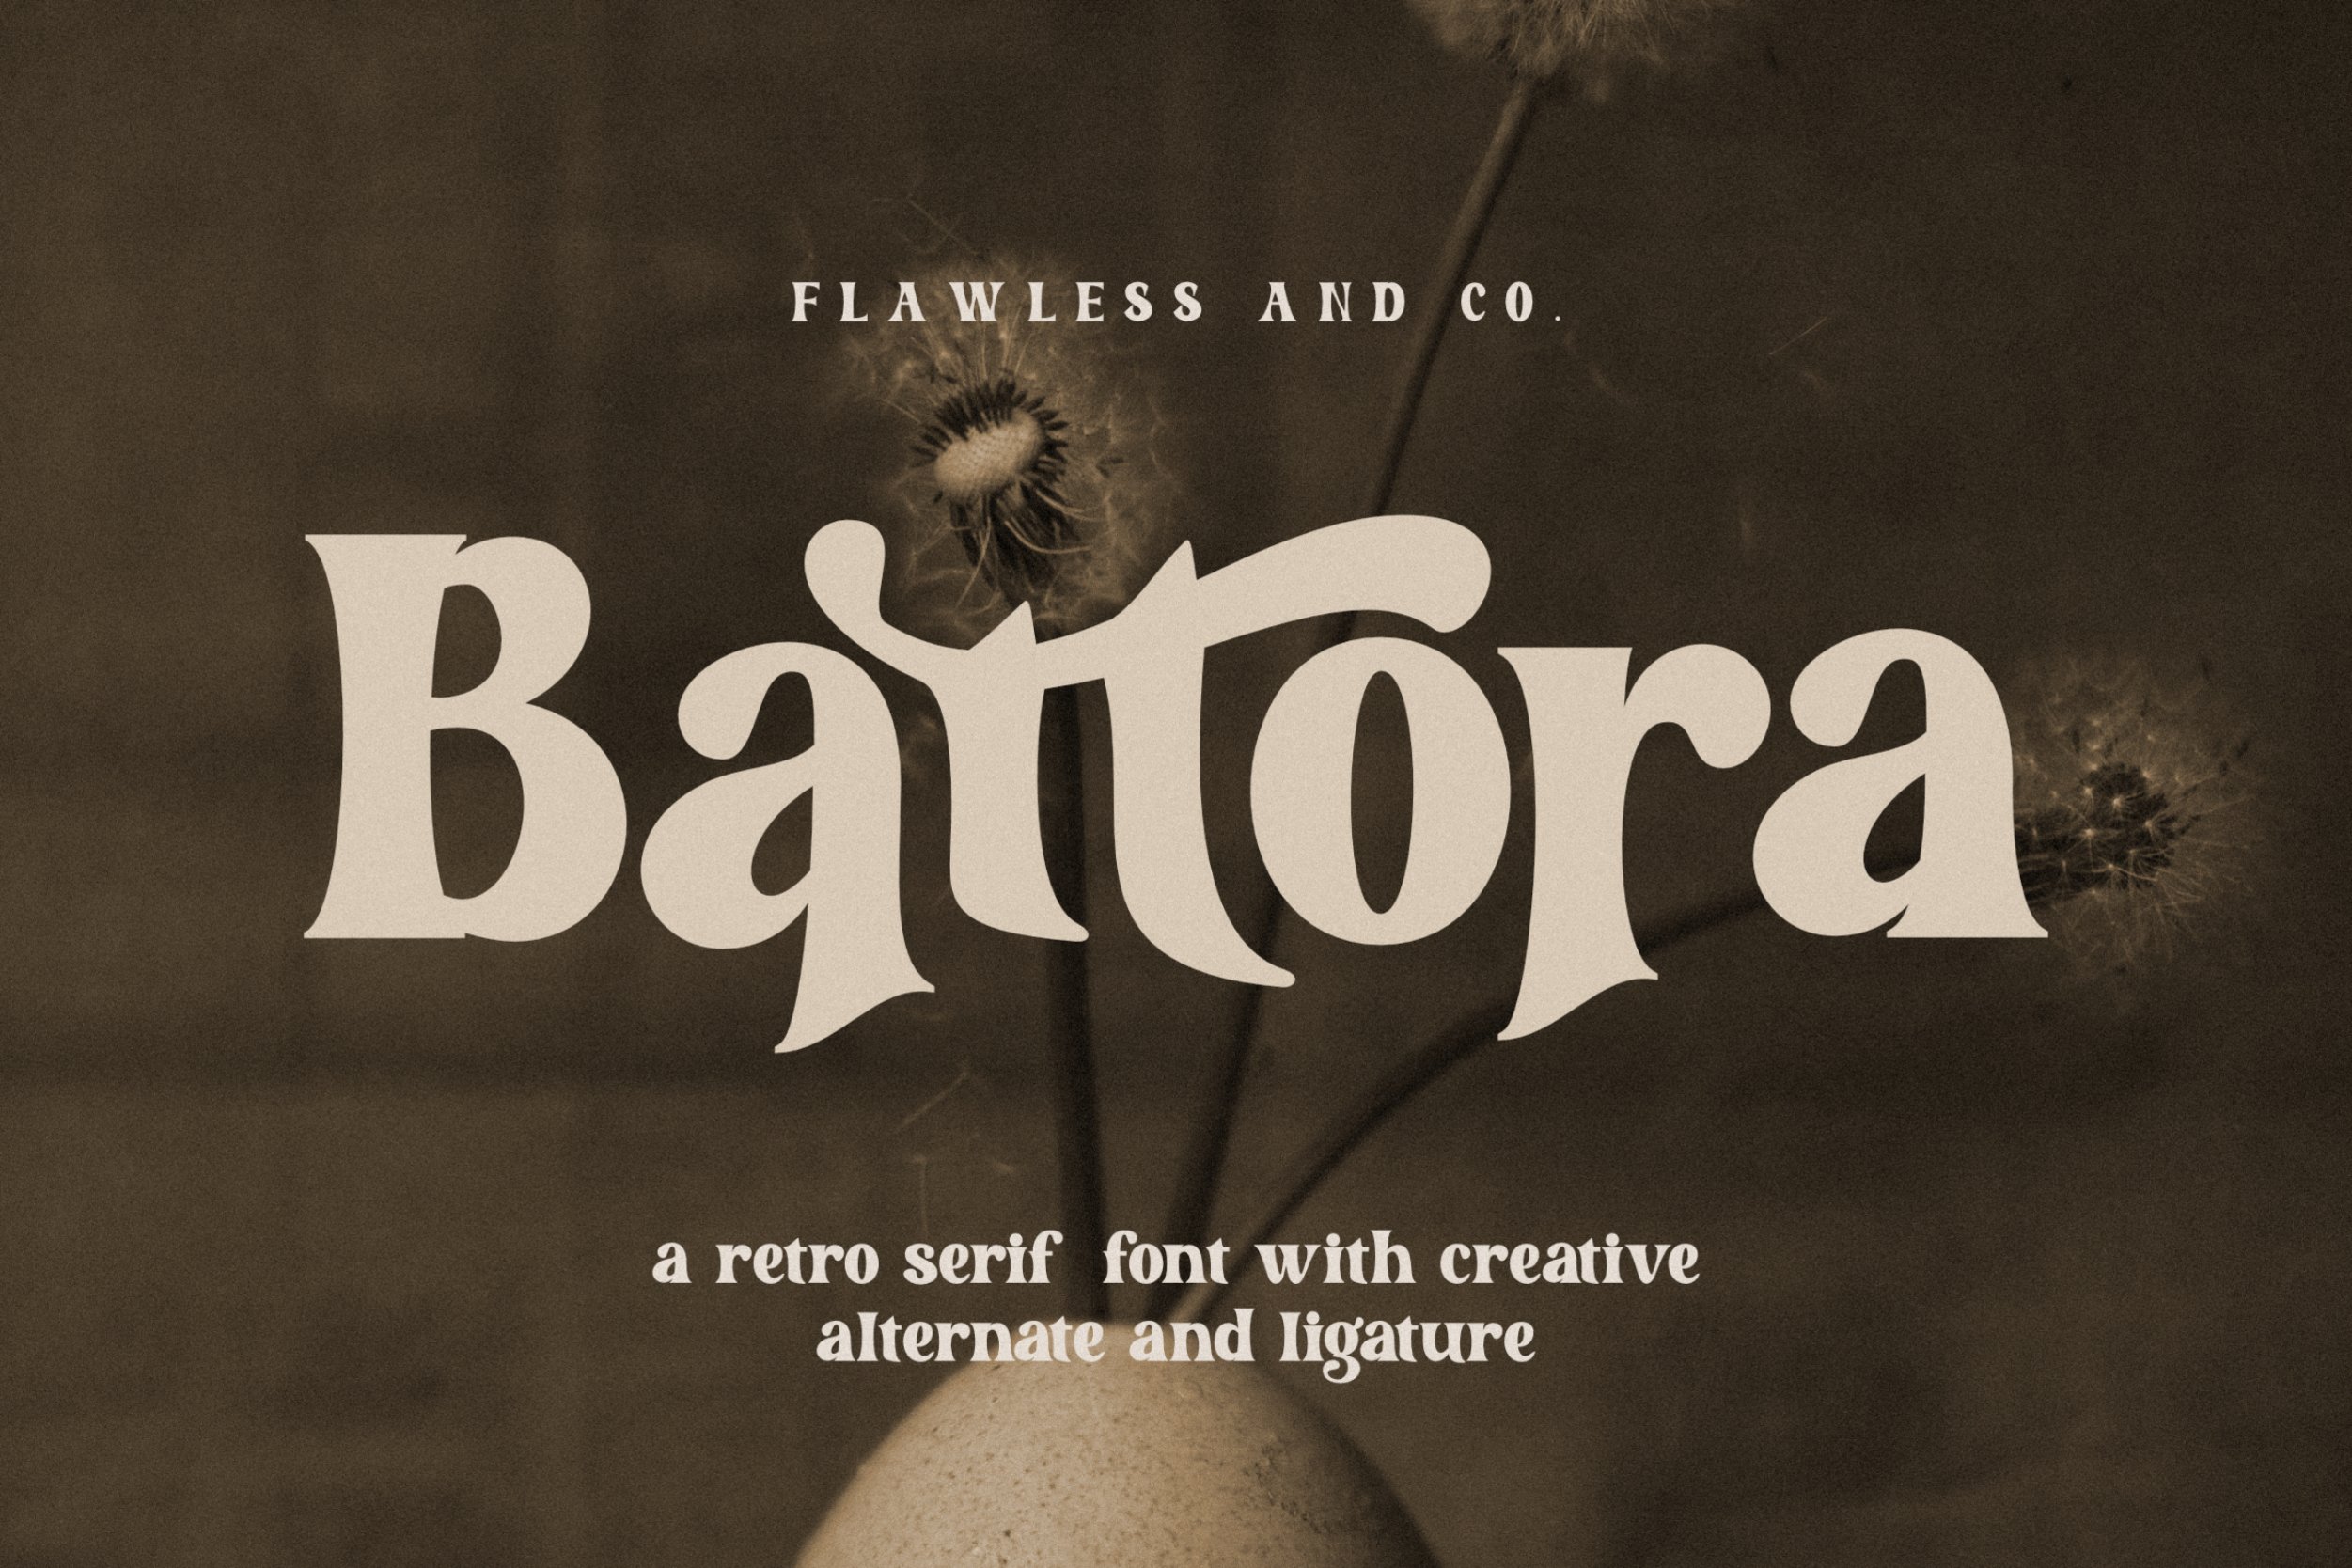 Battora - Modern Retro Font cover image.